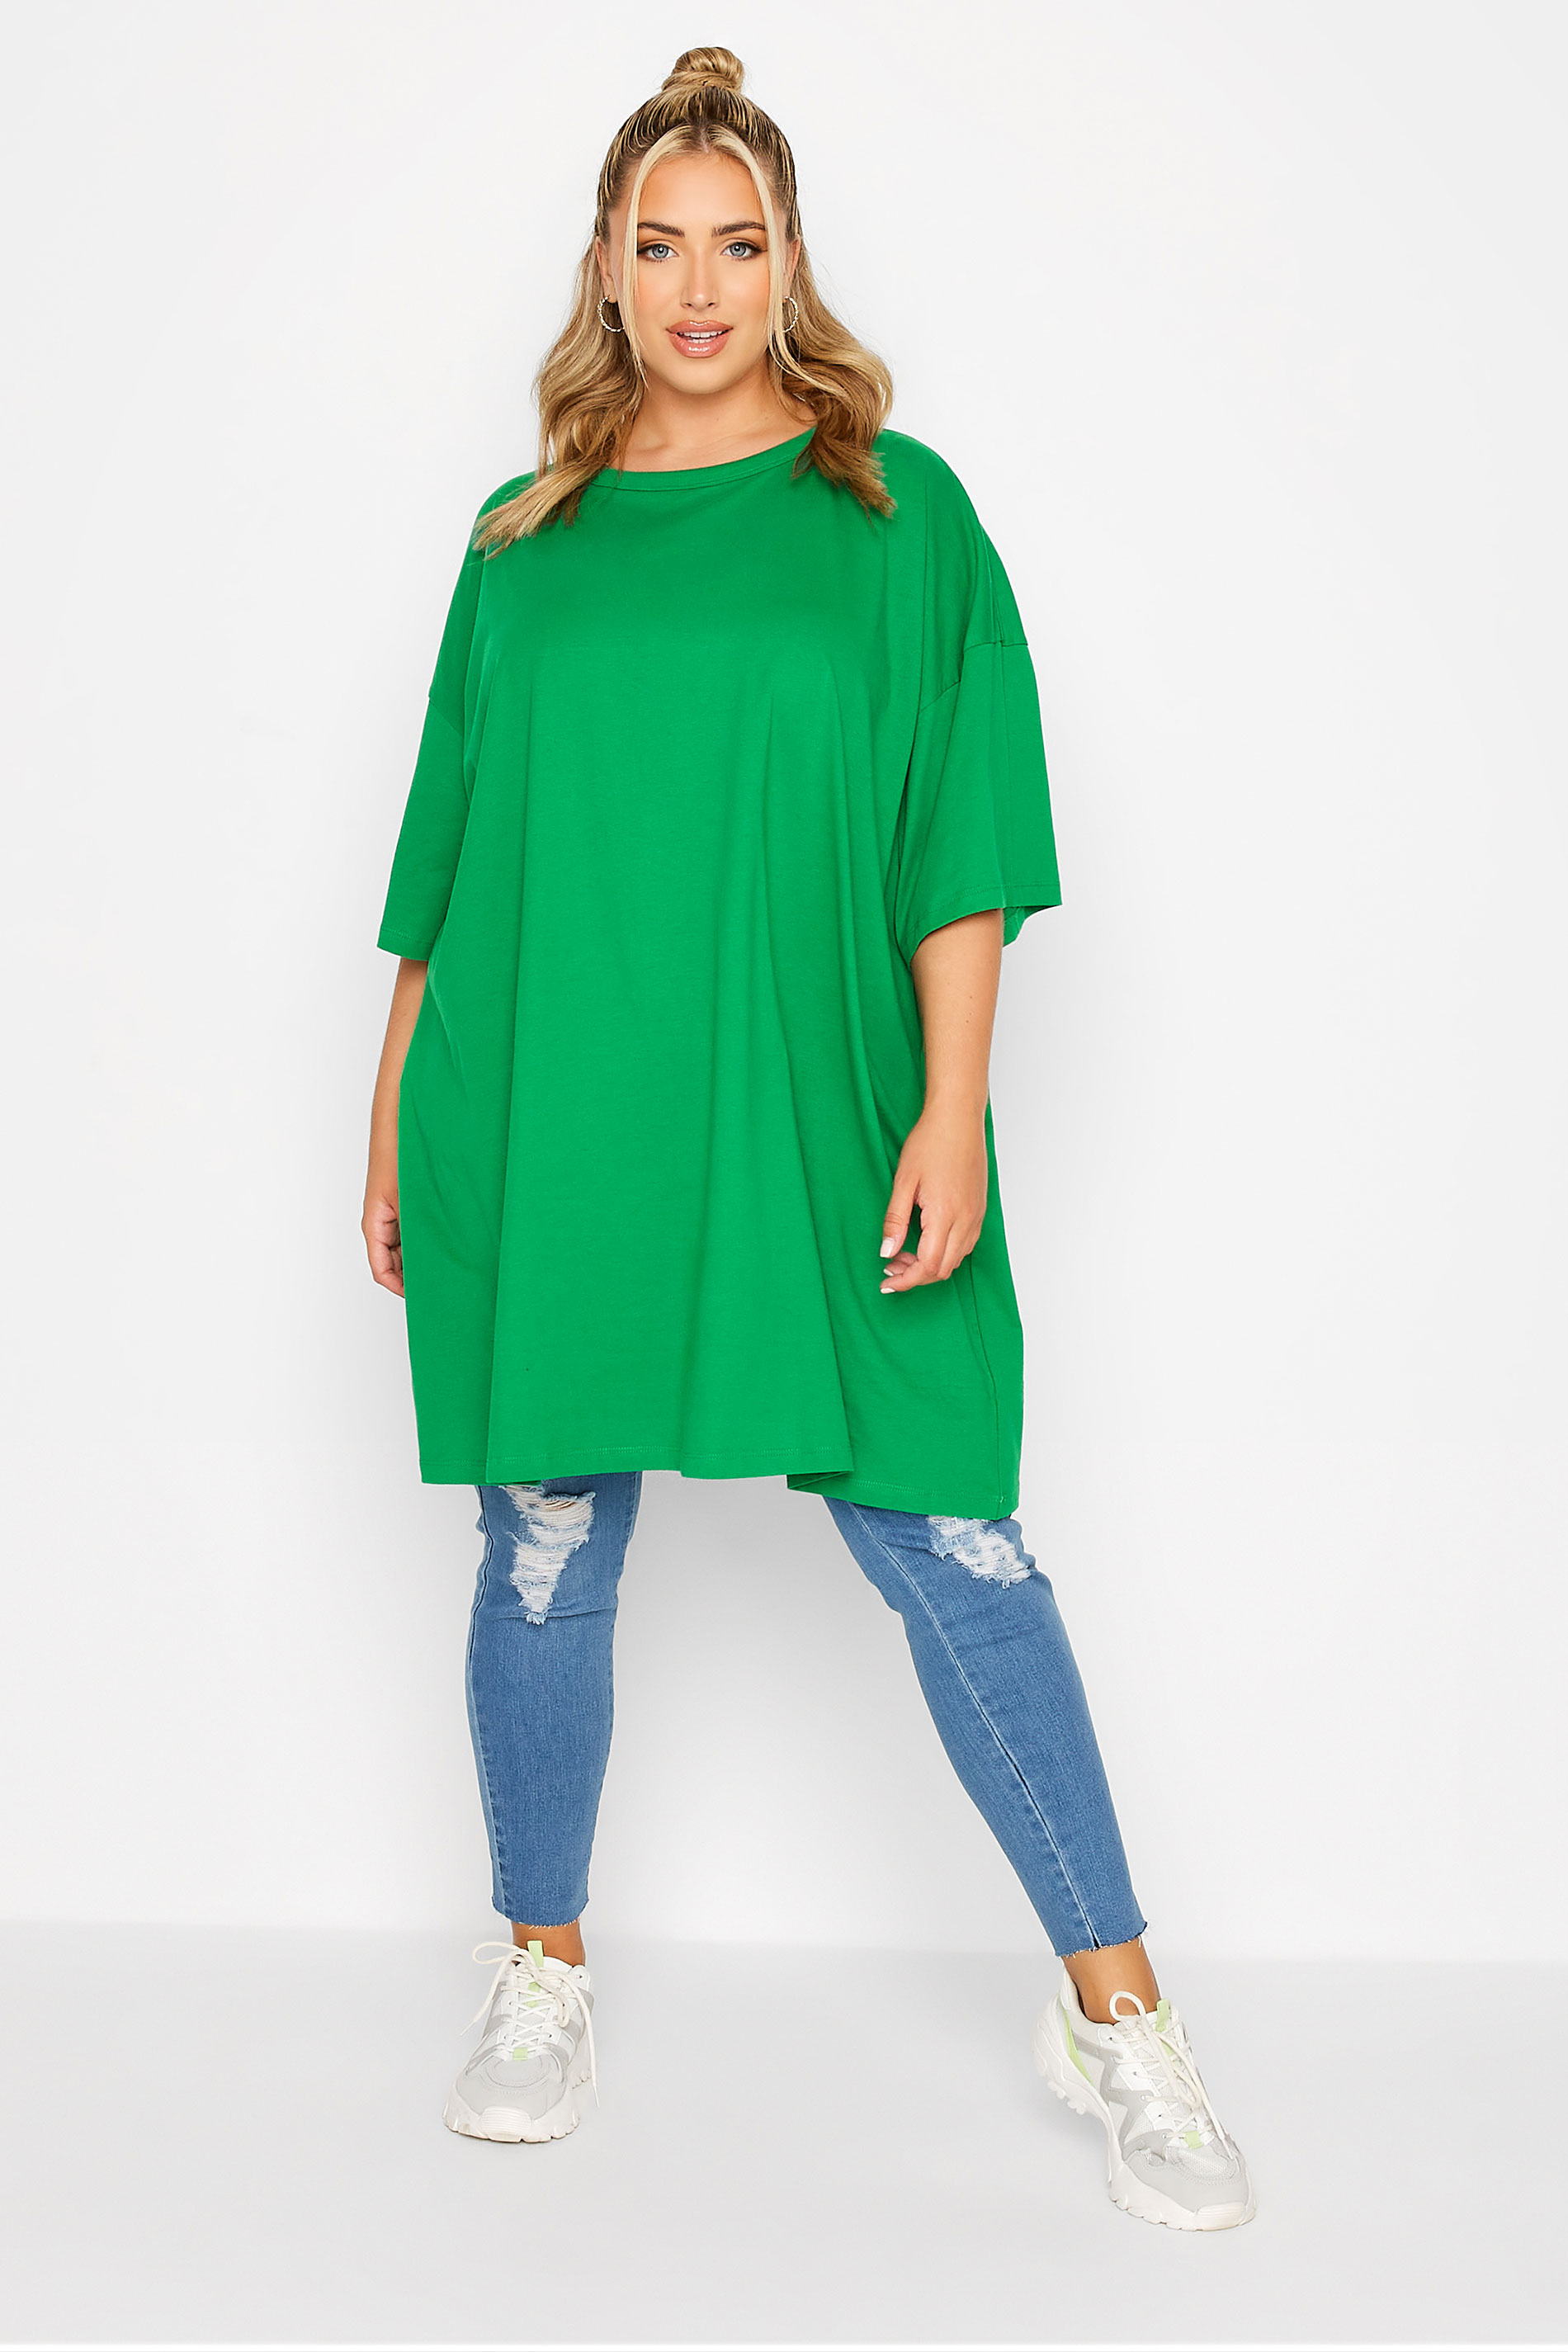 Plus Size Green Oversized Tunic T-Shirt Dress | Yours Clothing 2